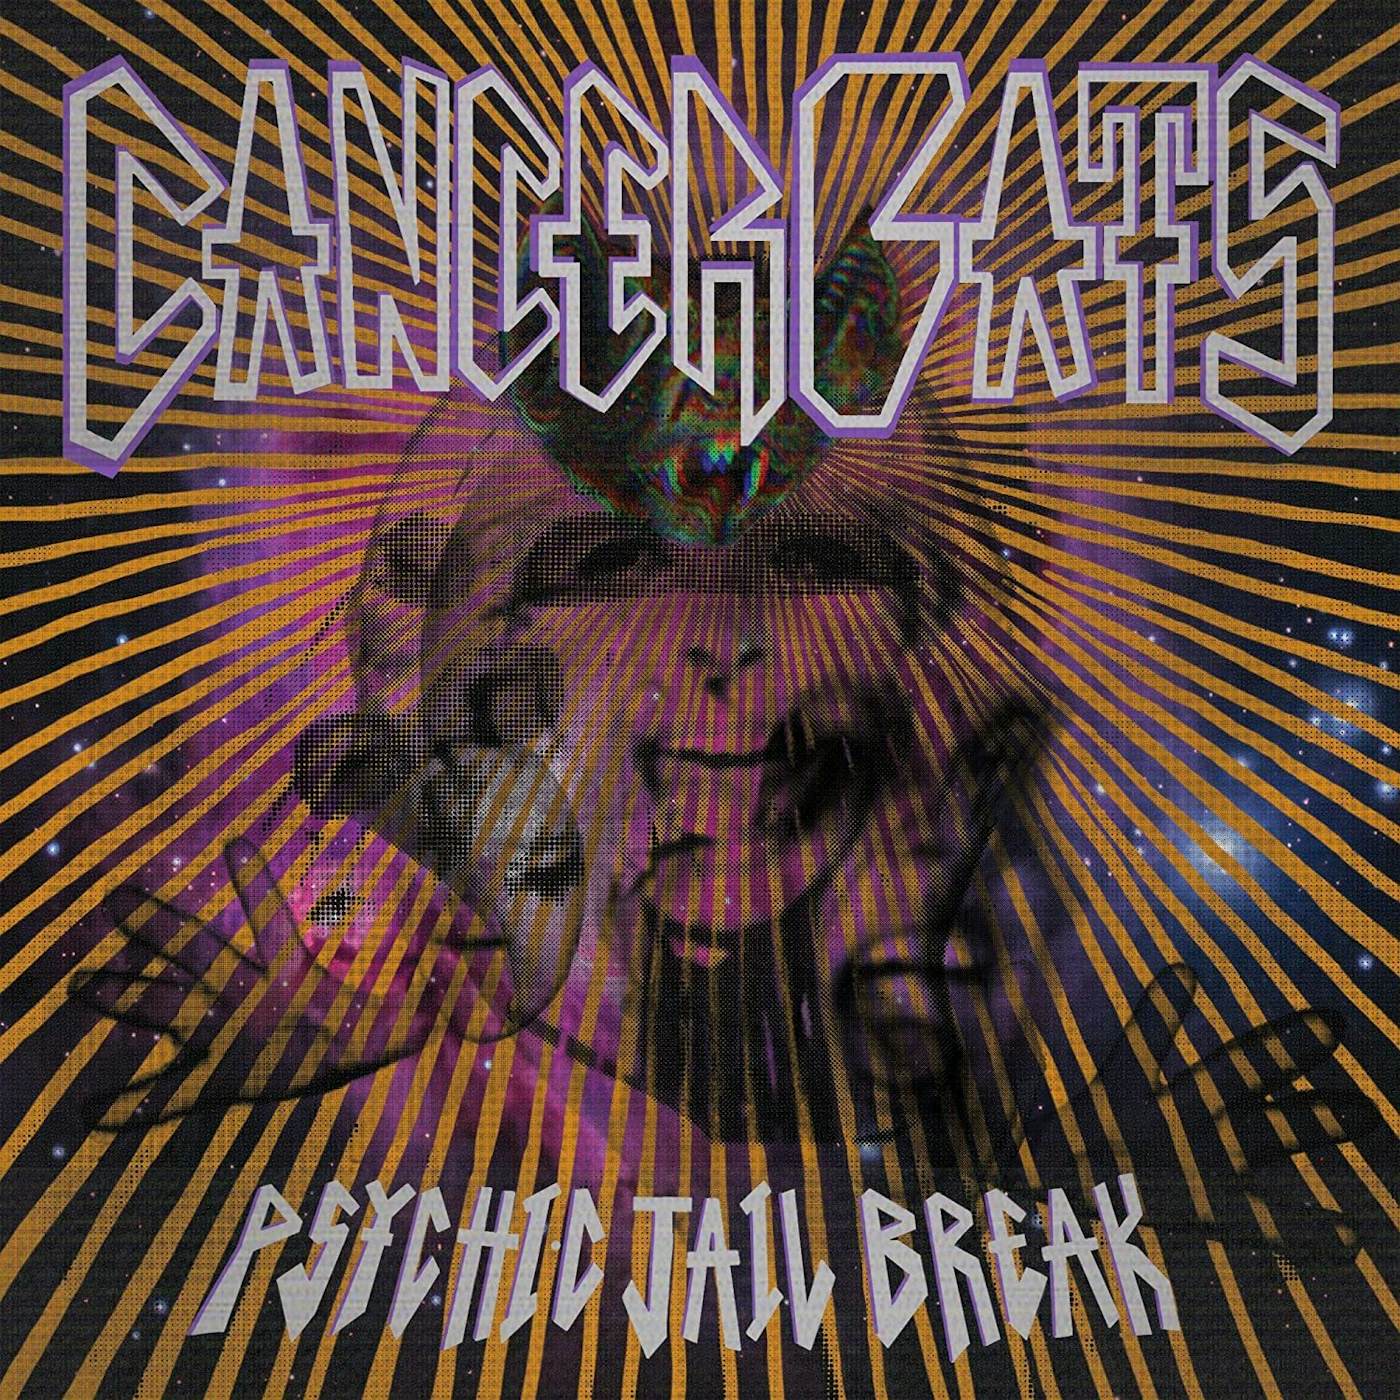 Cancer Bats Psychic Jailbreak Vinyl Record